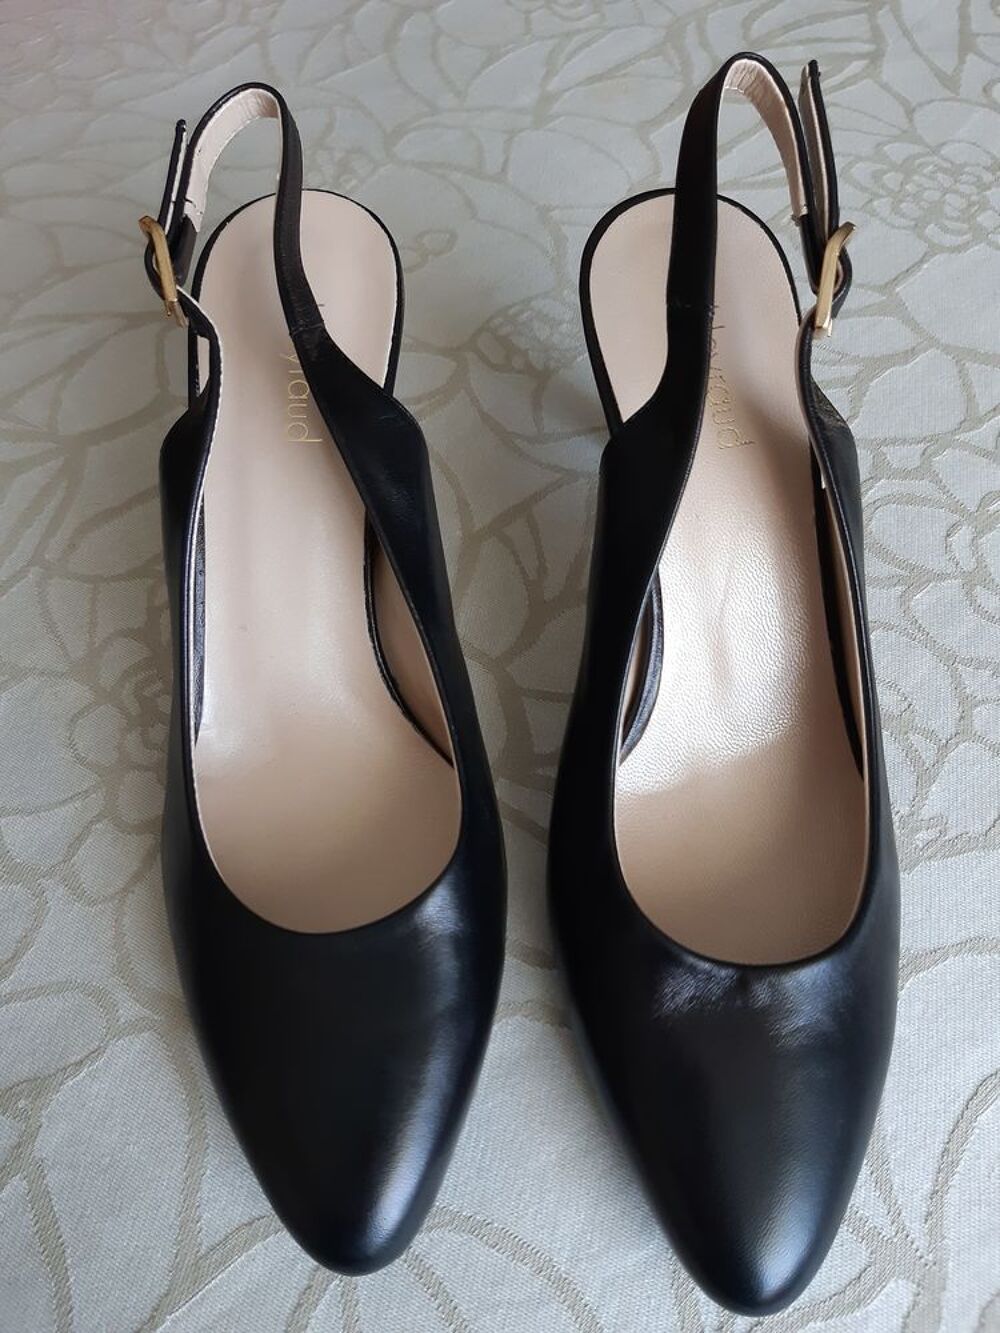 Escarpins Heyraud noirs Chaussures